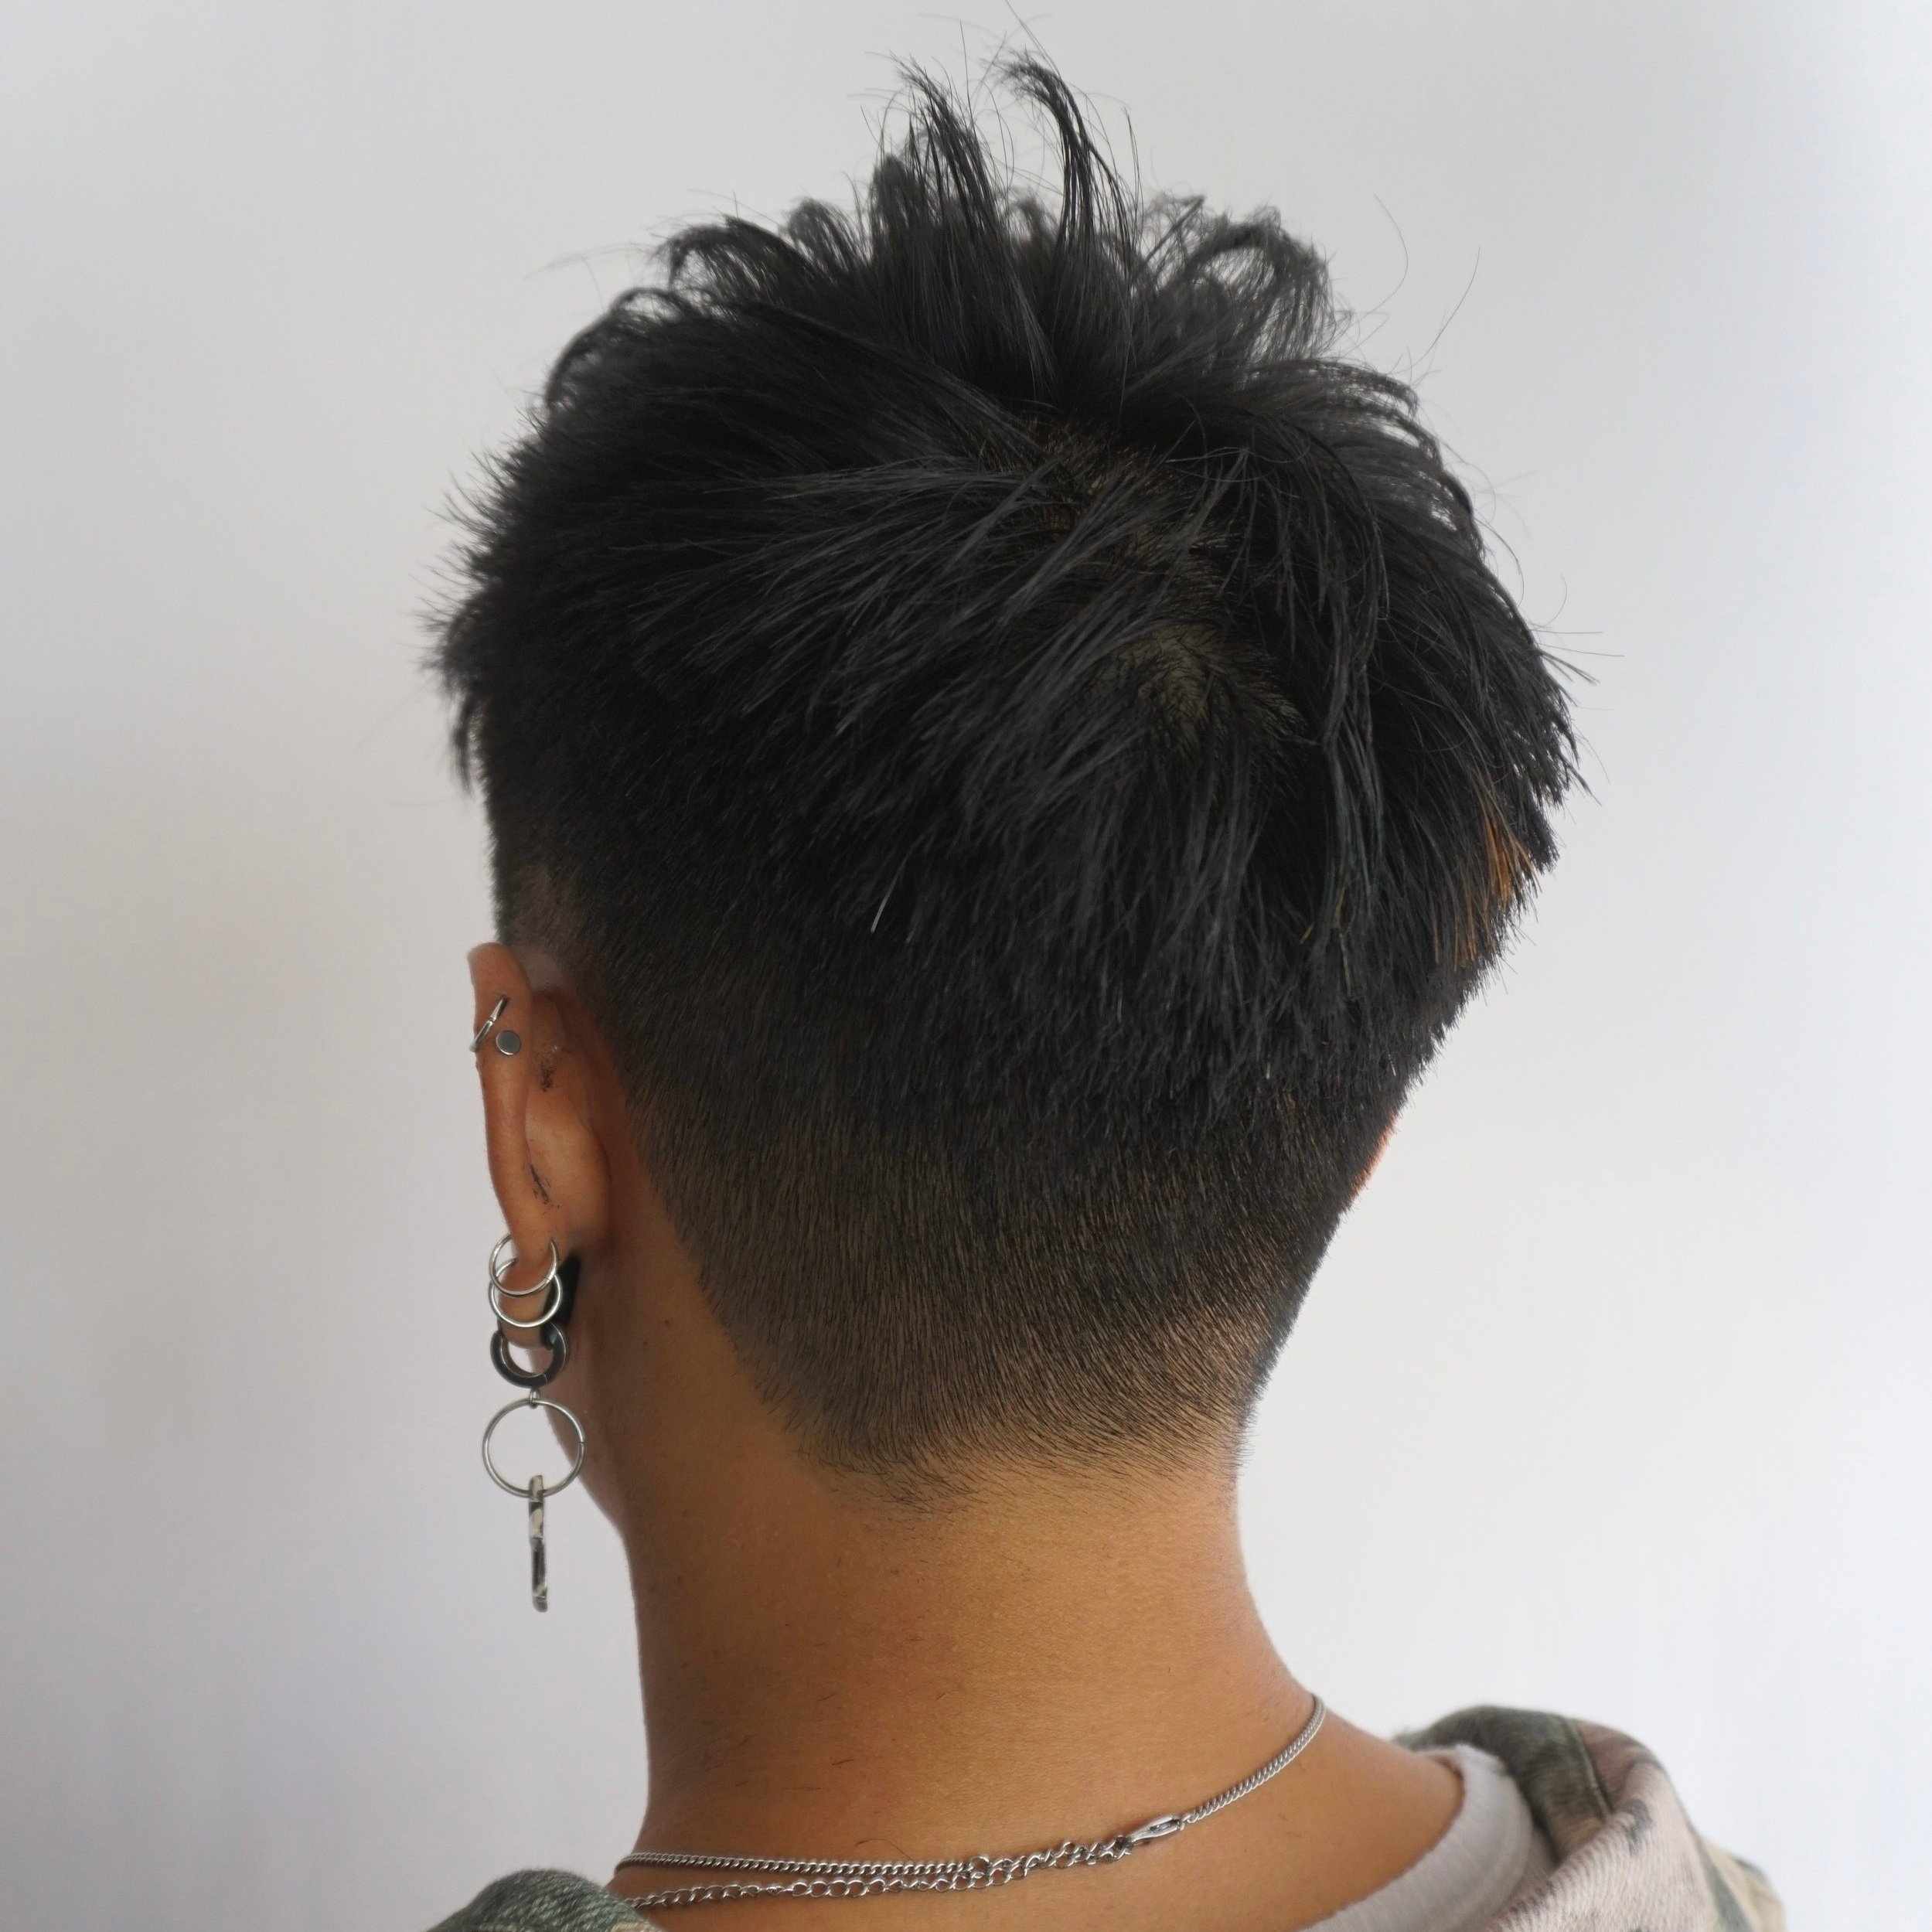 Haircut (Short Clipper Style)